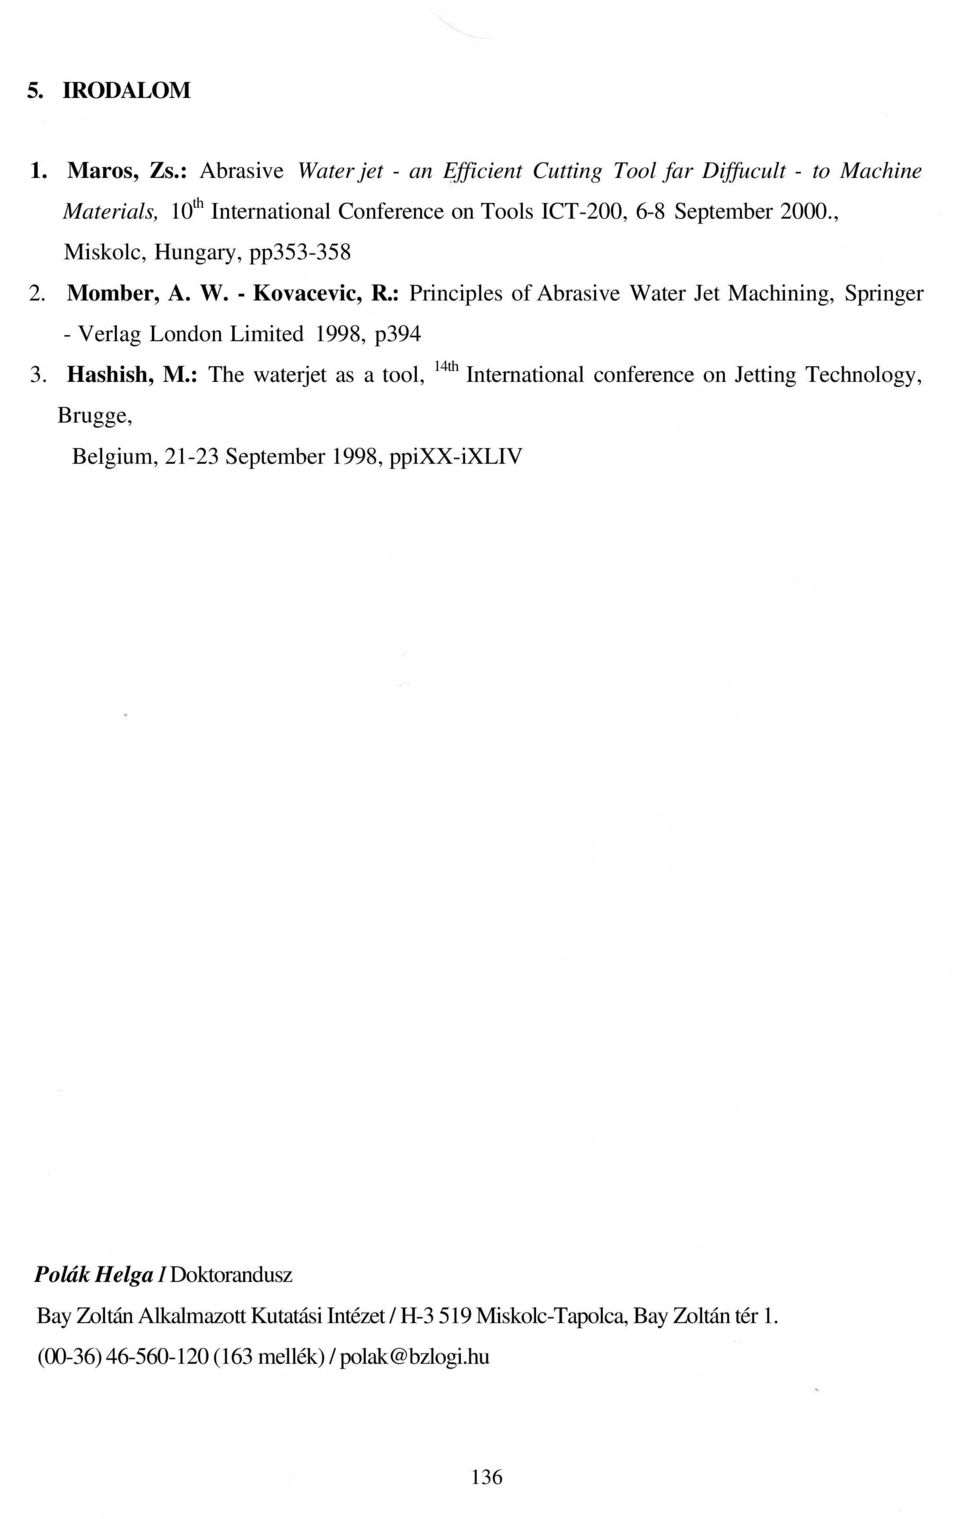 , Miskolc, Hungary, pp353-358 2. Momber, A. W. - Kovacevic, R.: Principles of Abrasive Water Jet Machining, Springer - Verlag London Limited 1998, p394 3.